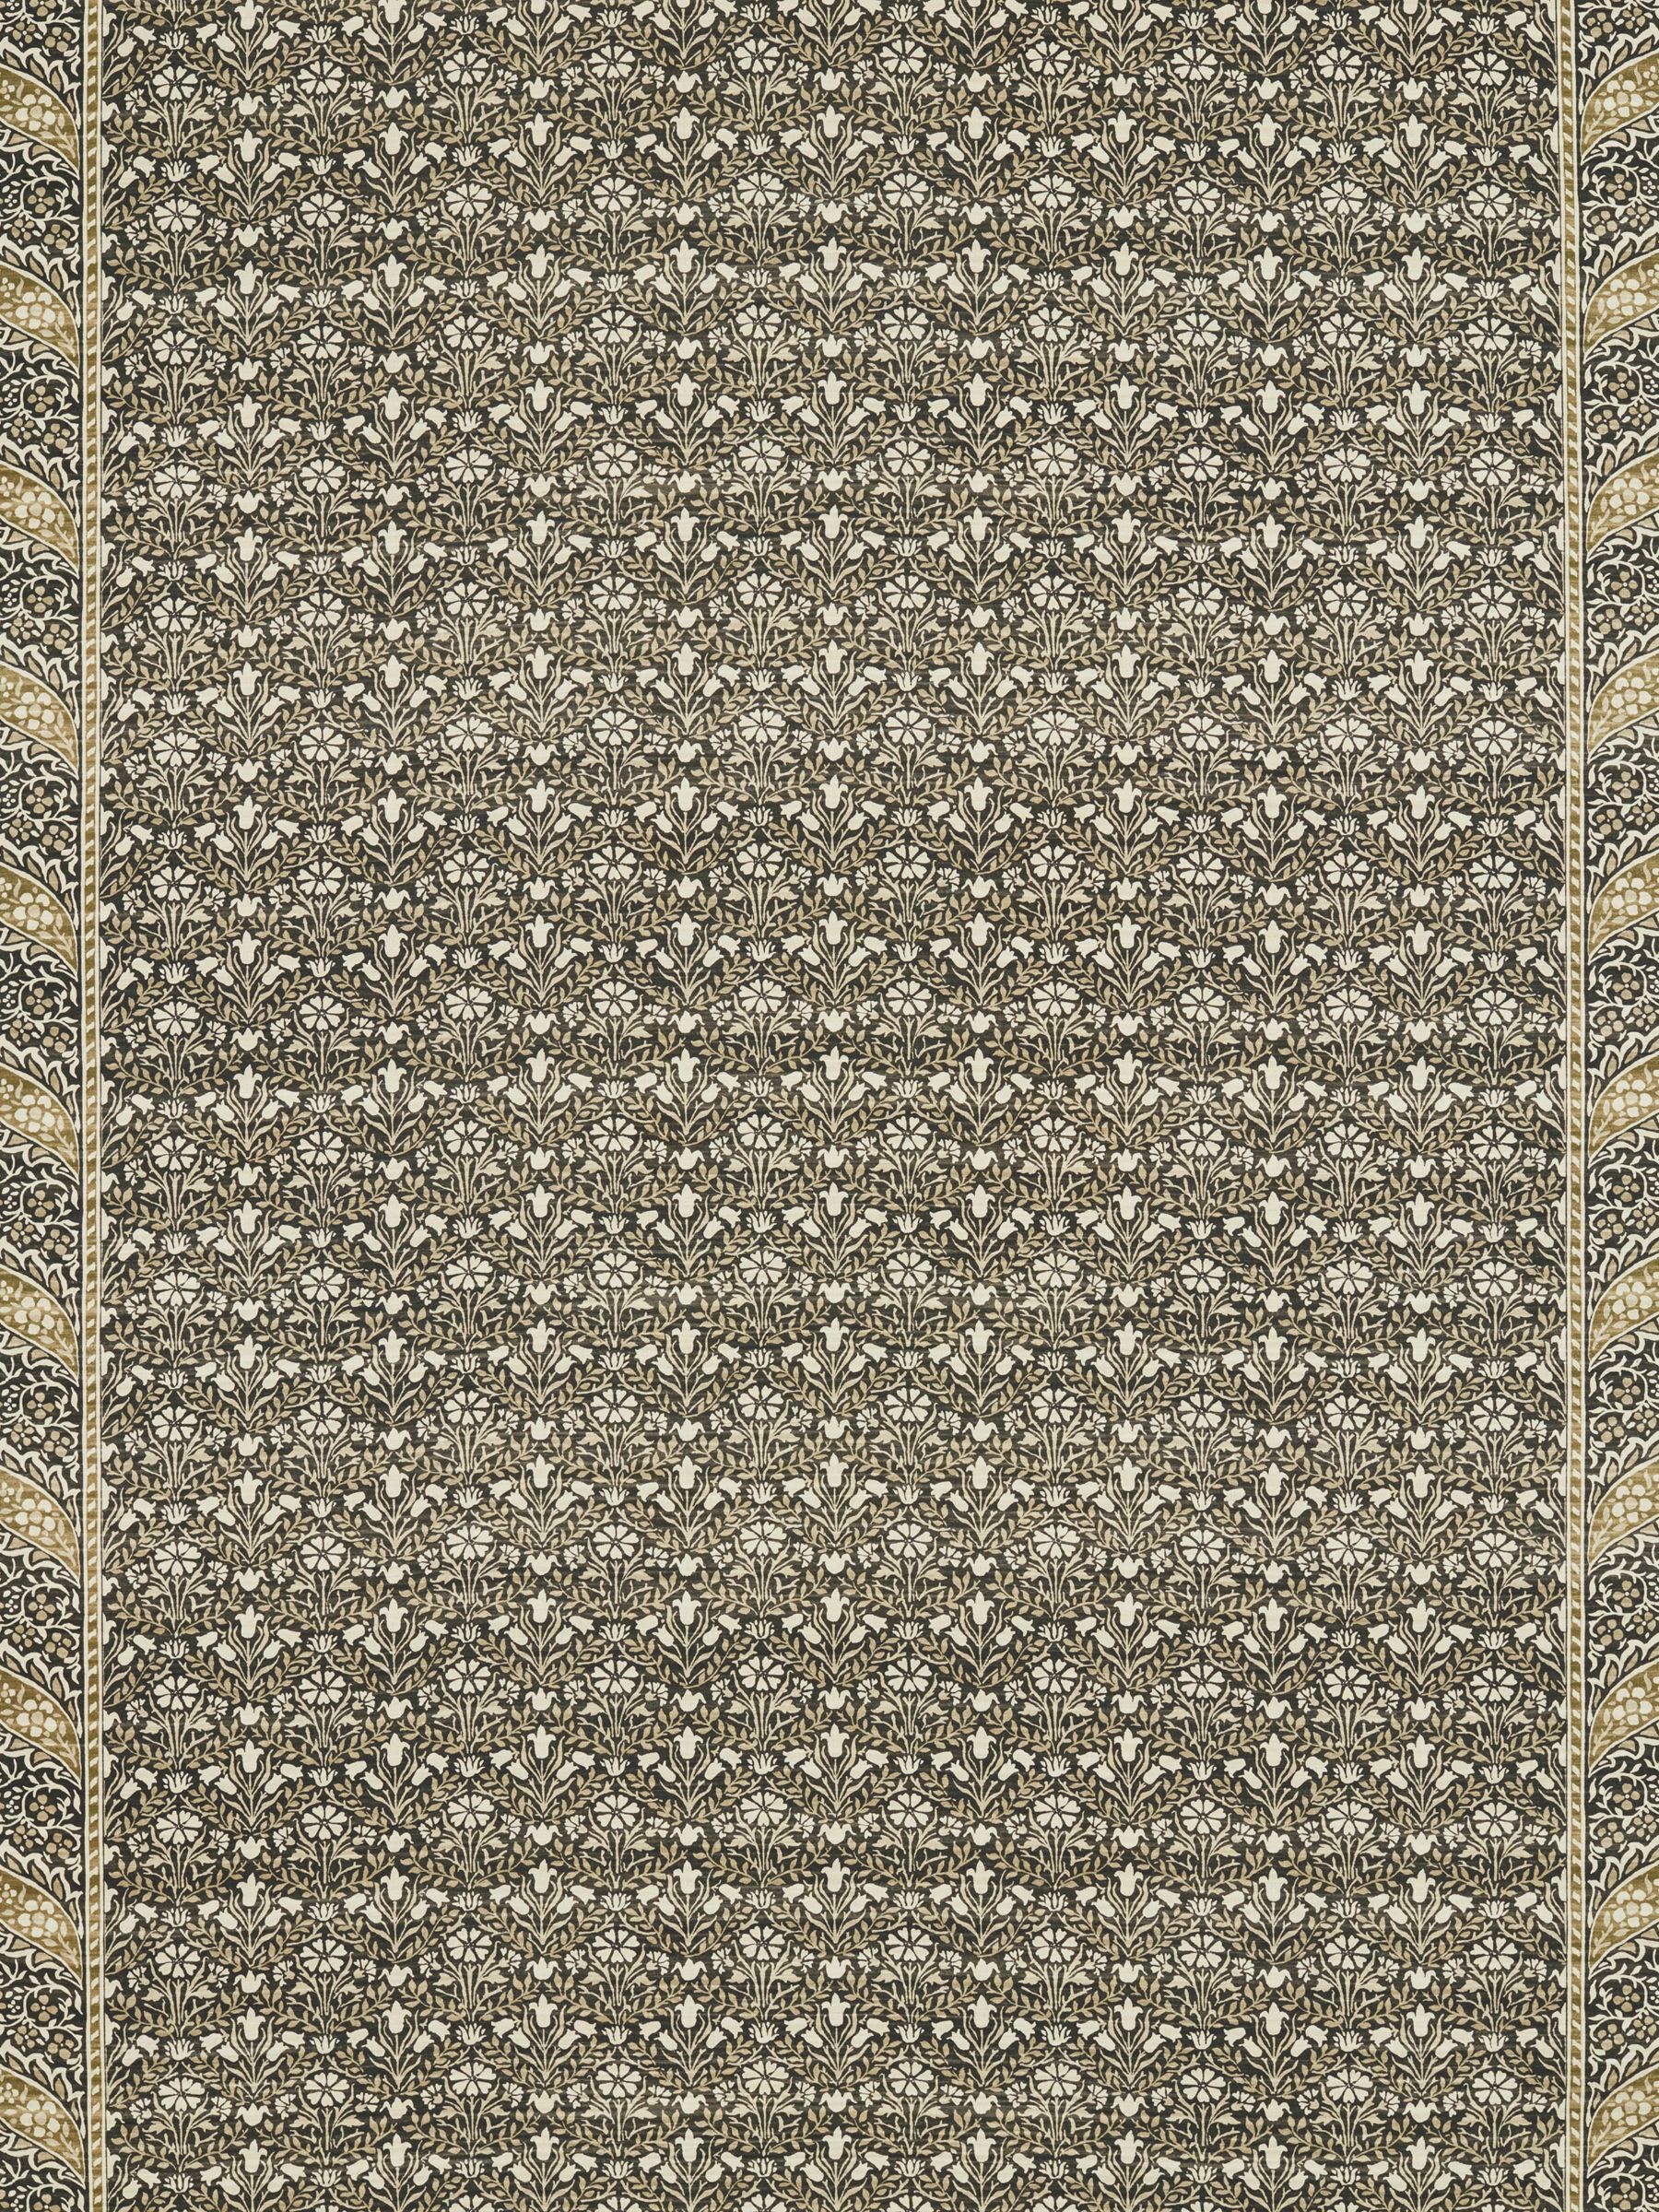 Morris & Co. Bellflowers Furnishing Fabric, Charcoal/Olive